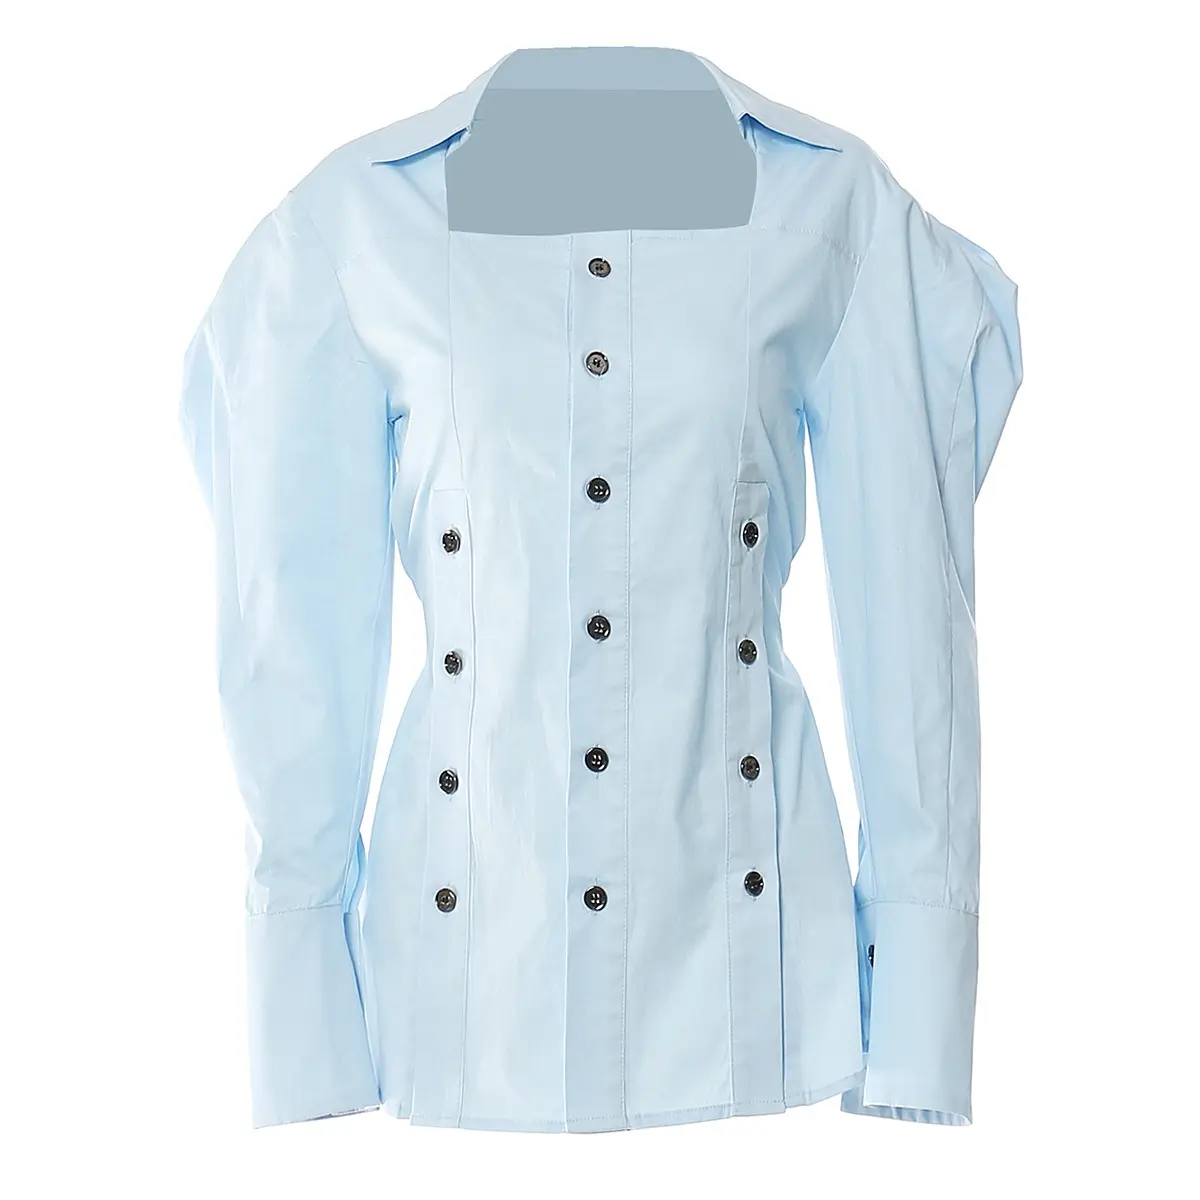 OUDINA Fashionable Casual Elegant Long Sleeve Button Up Top Shirt Women's Blouse Shirt